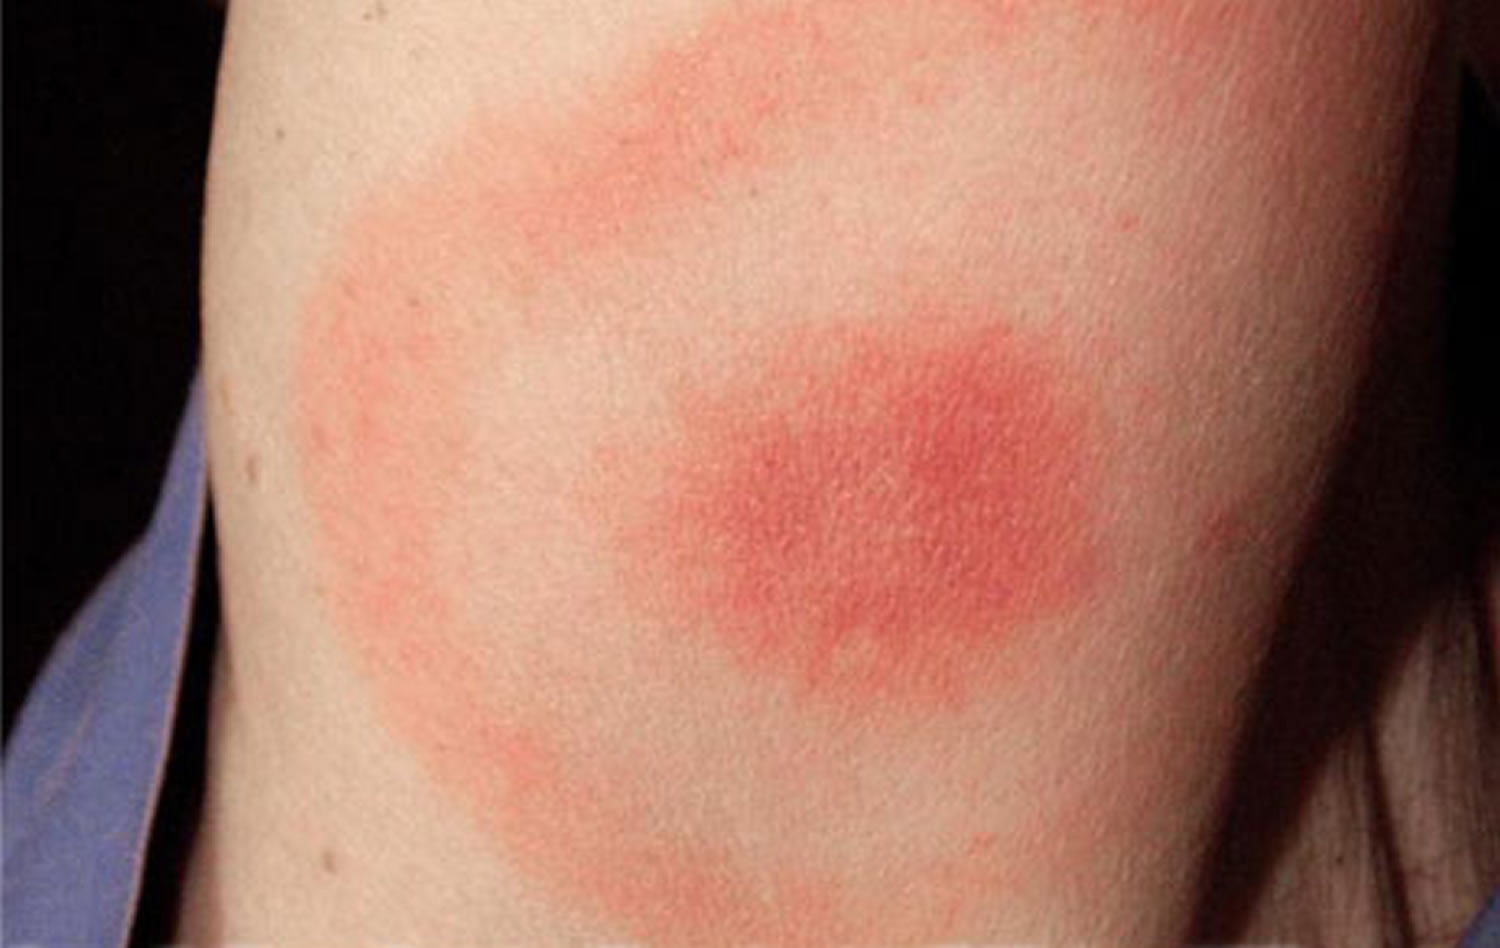 classic lyme disease rash